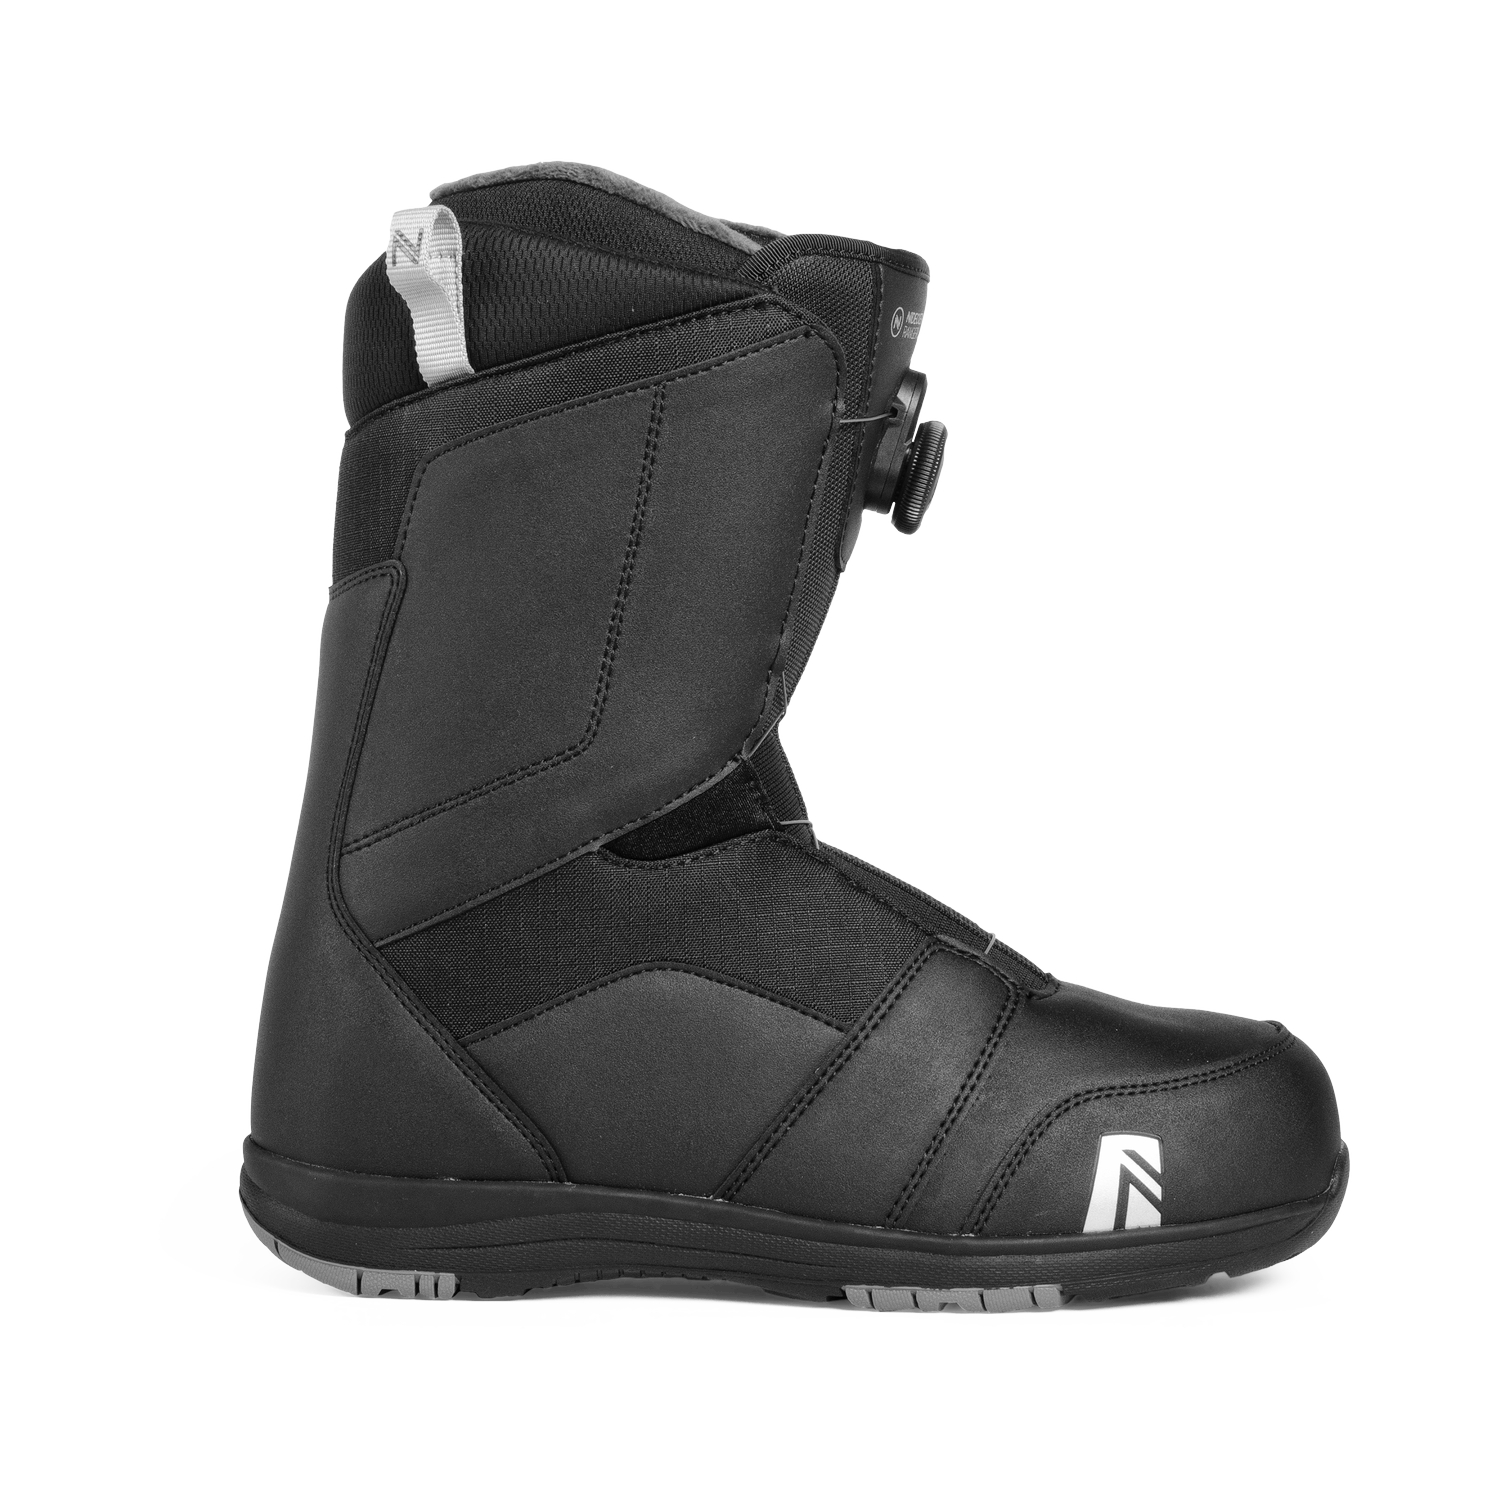 Ботинки для сноуборда NIDECKER 2018-19 Ranger Boa Black